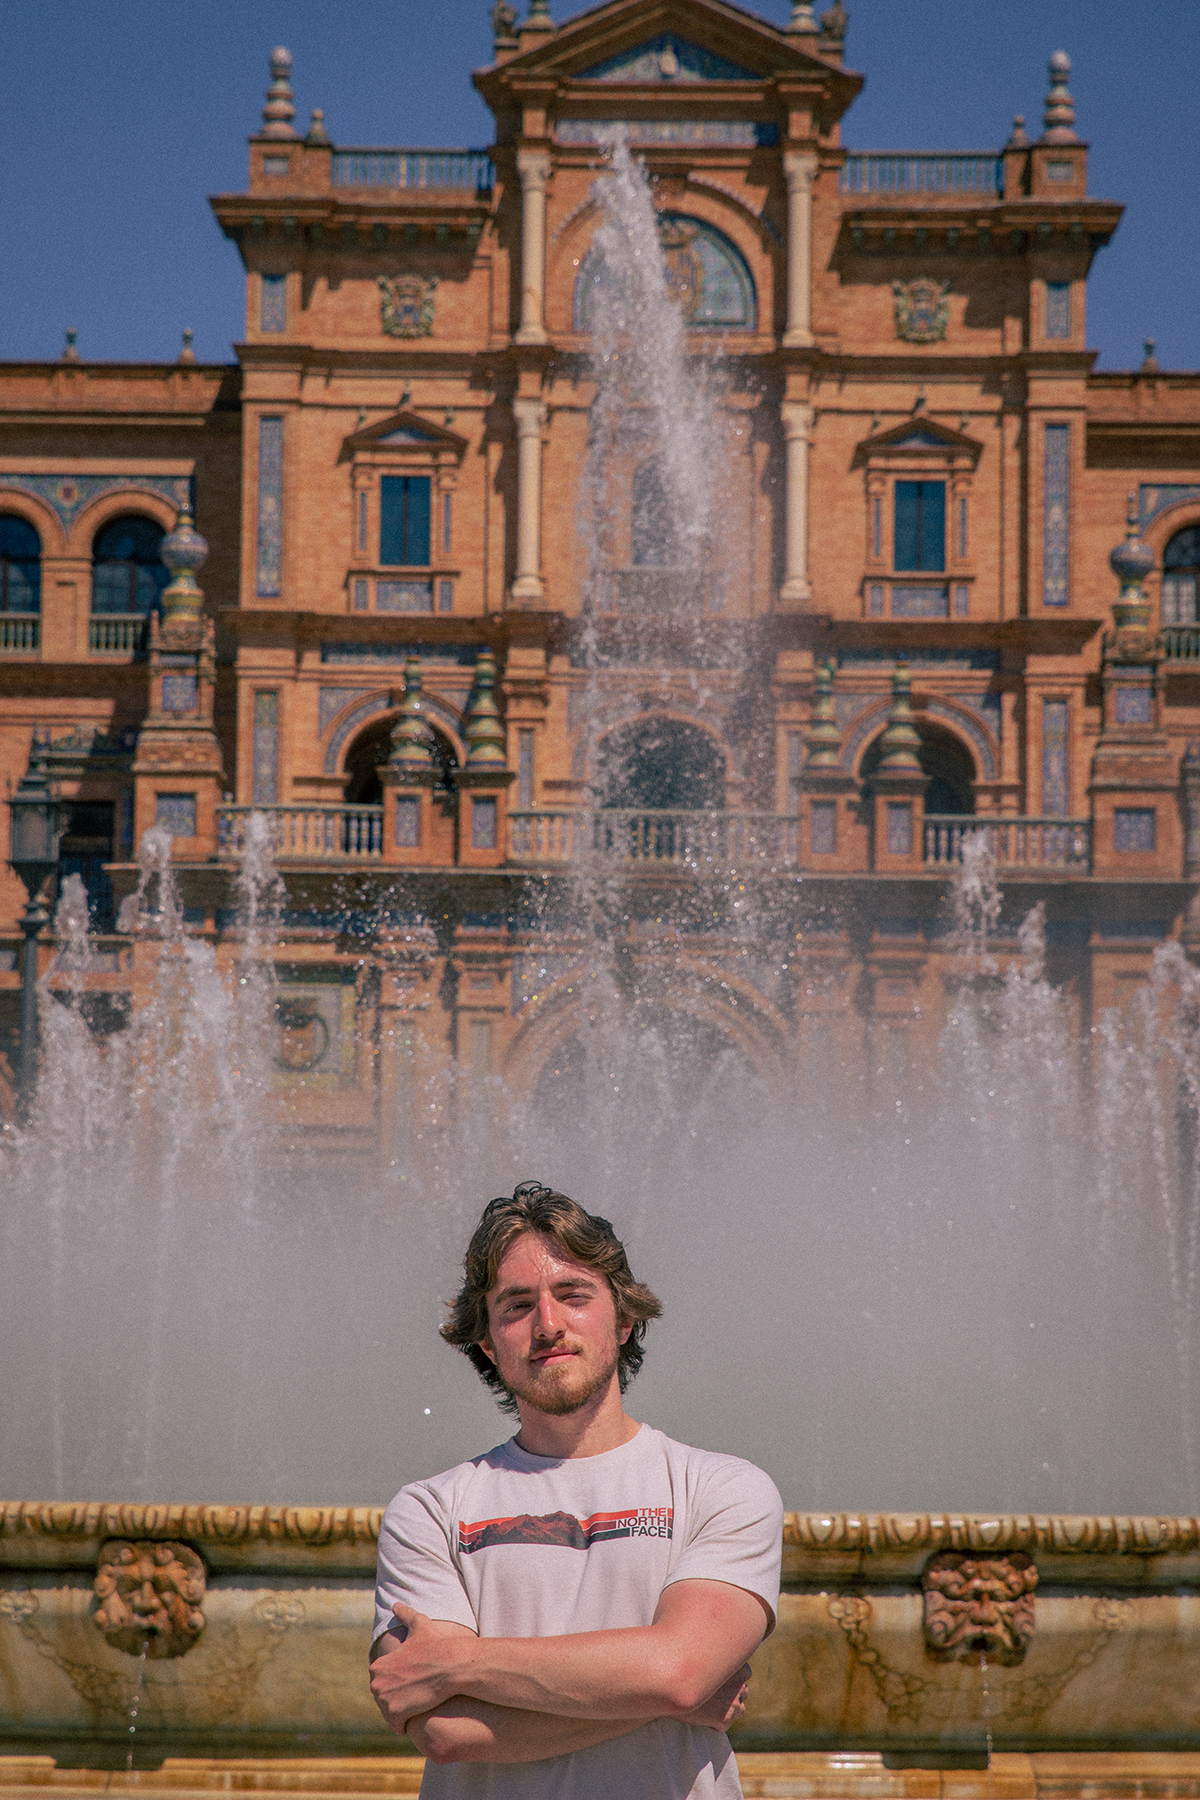 The magnificent fountain of the Plaza de España.